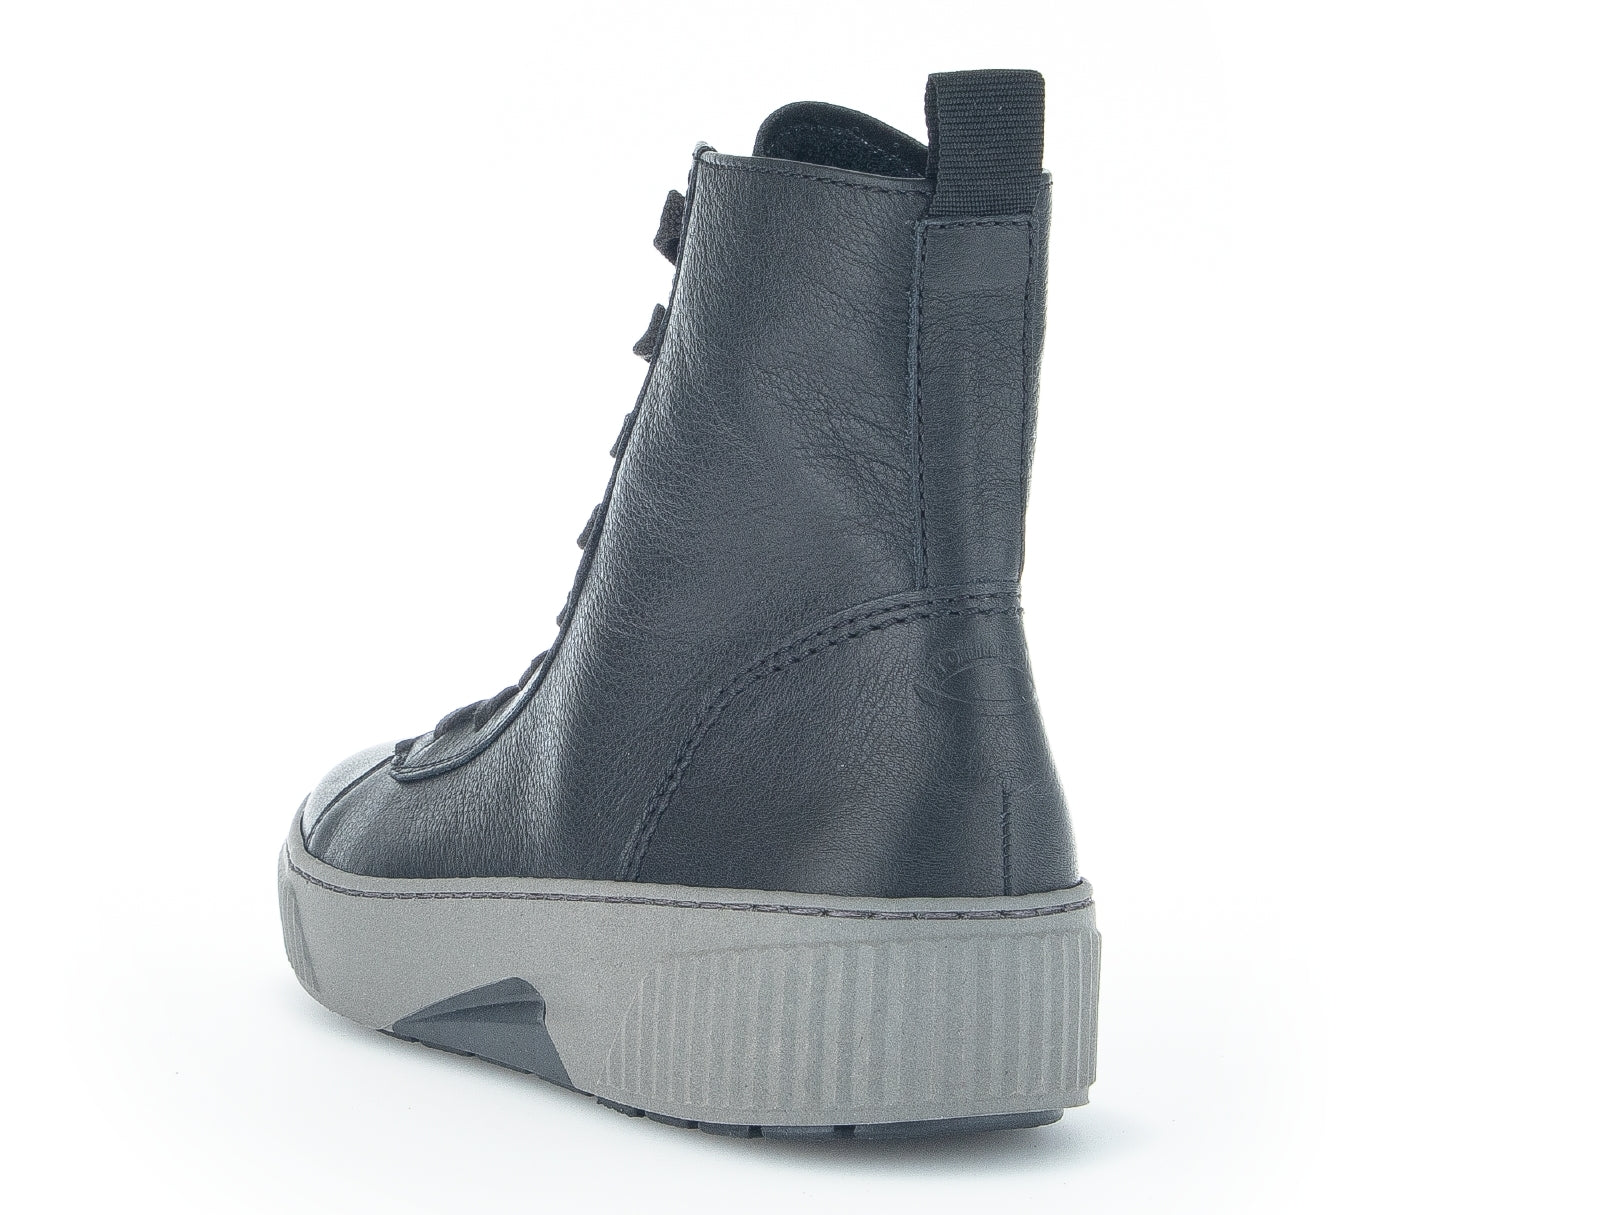 '96.805.57' women's walking boot - Black - Chaplinshoes'96.805.57' women's walking boot - BlackGabor